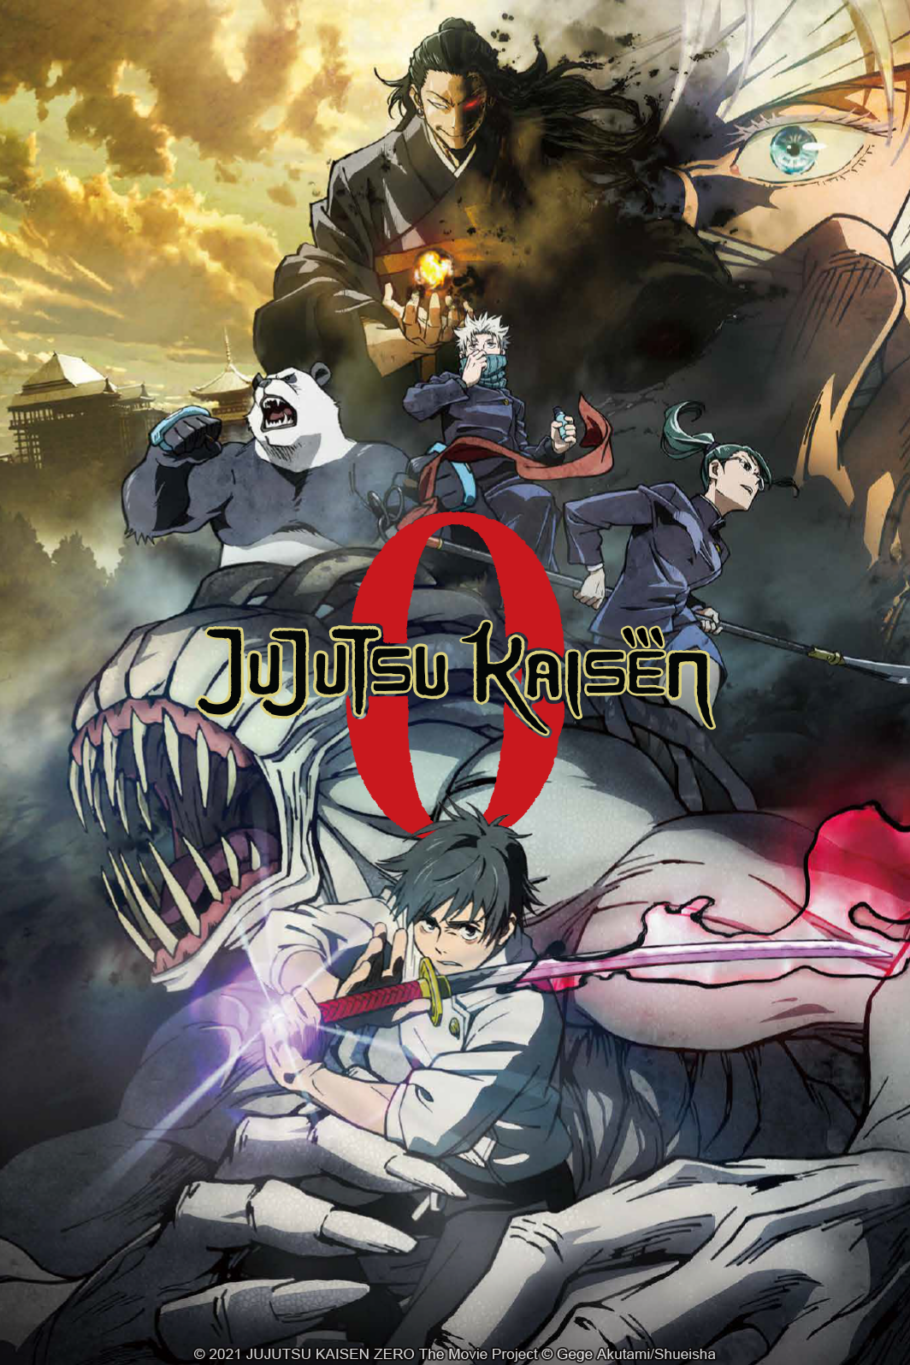 Jujutsu Kaisen 0 chega aos cinemas brasileiros em 24 de março